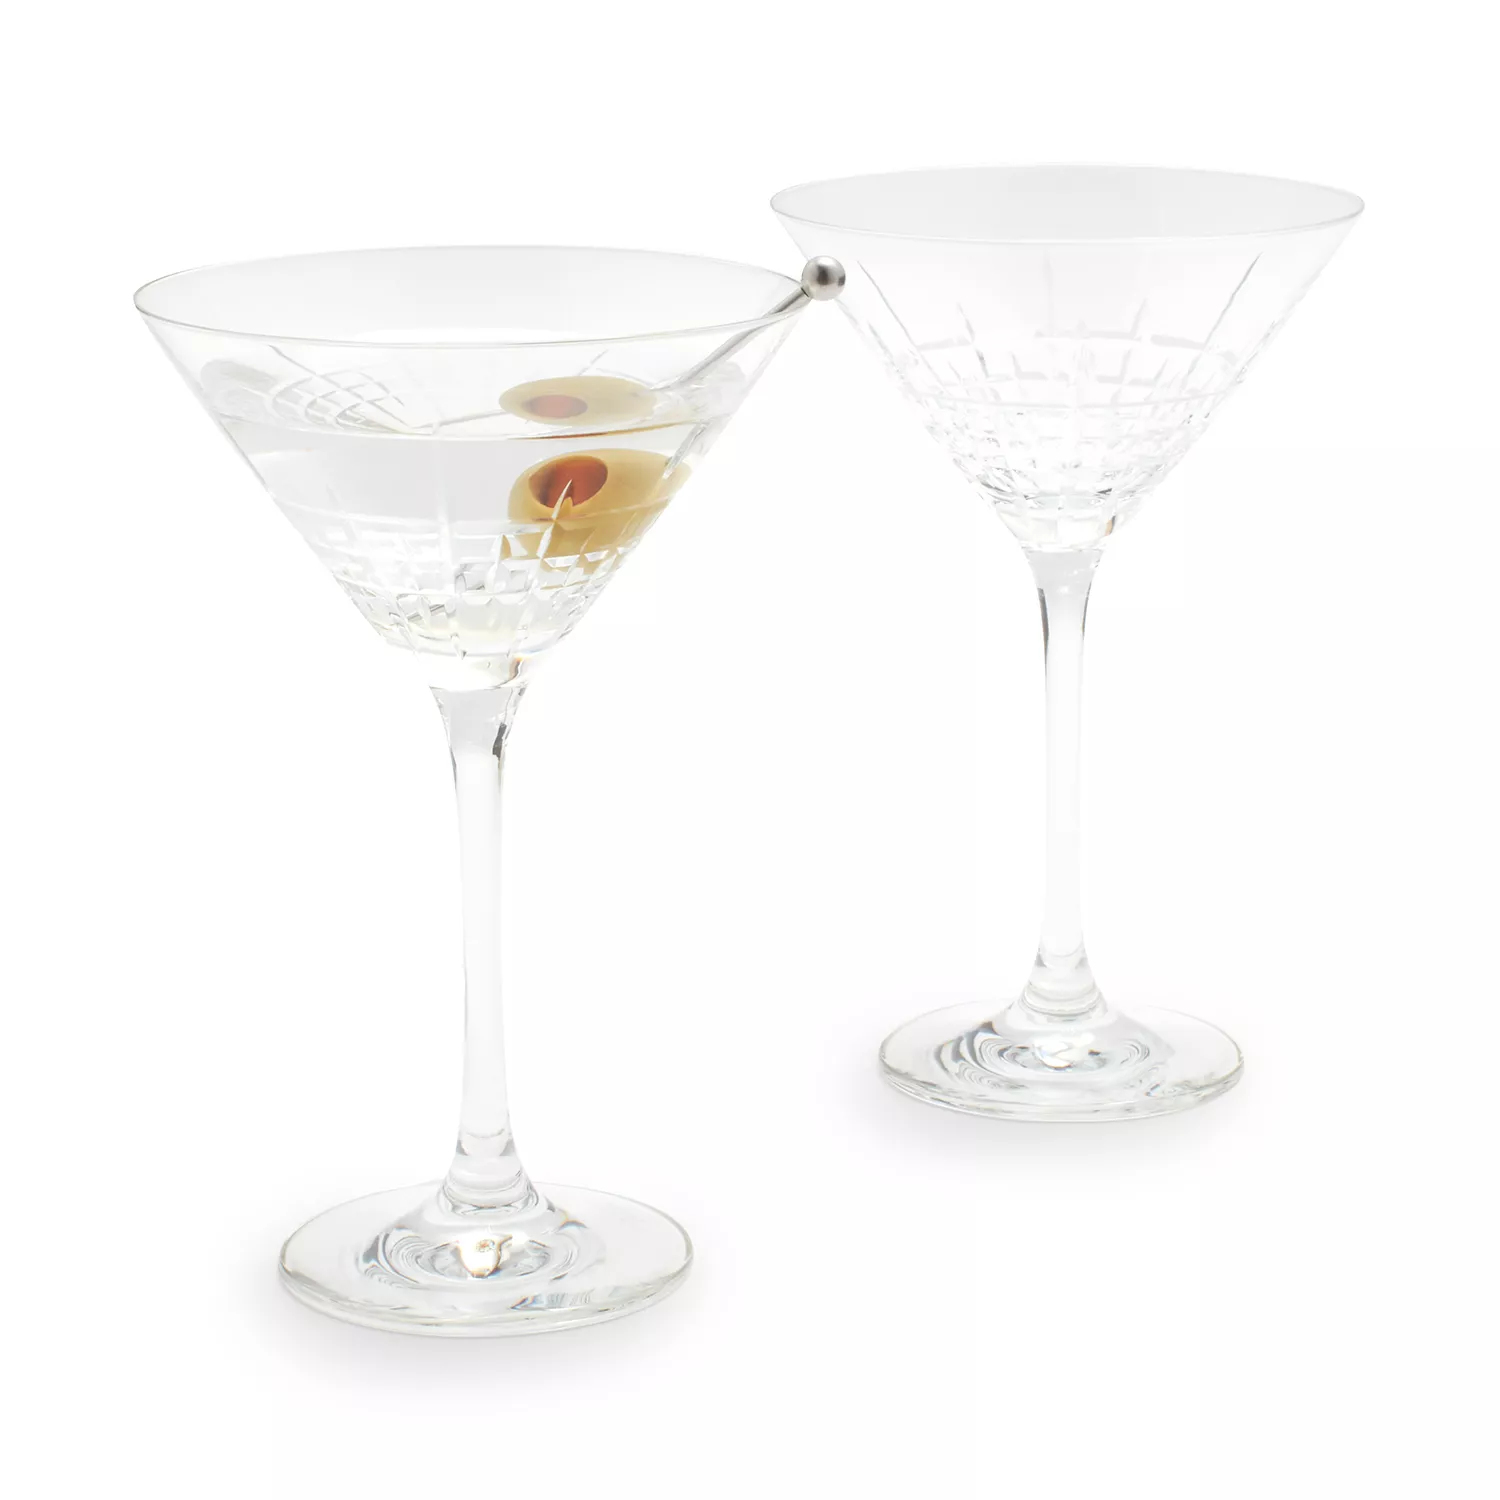 Zwiesel Glas Distil Aberdeen Martini Glasses, Set of 6